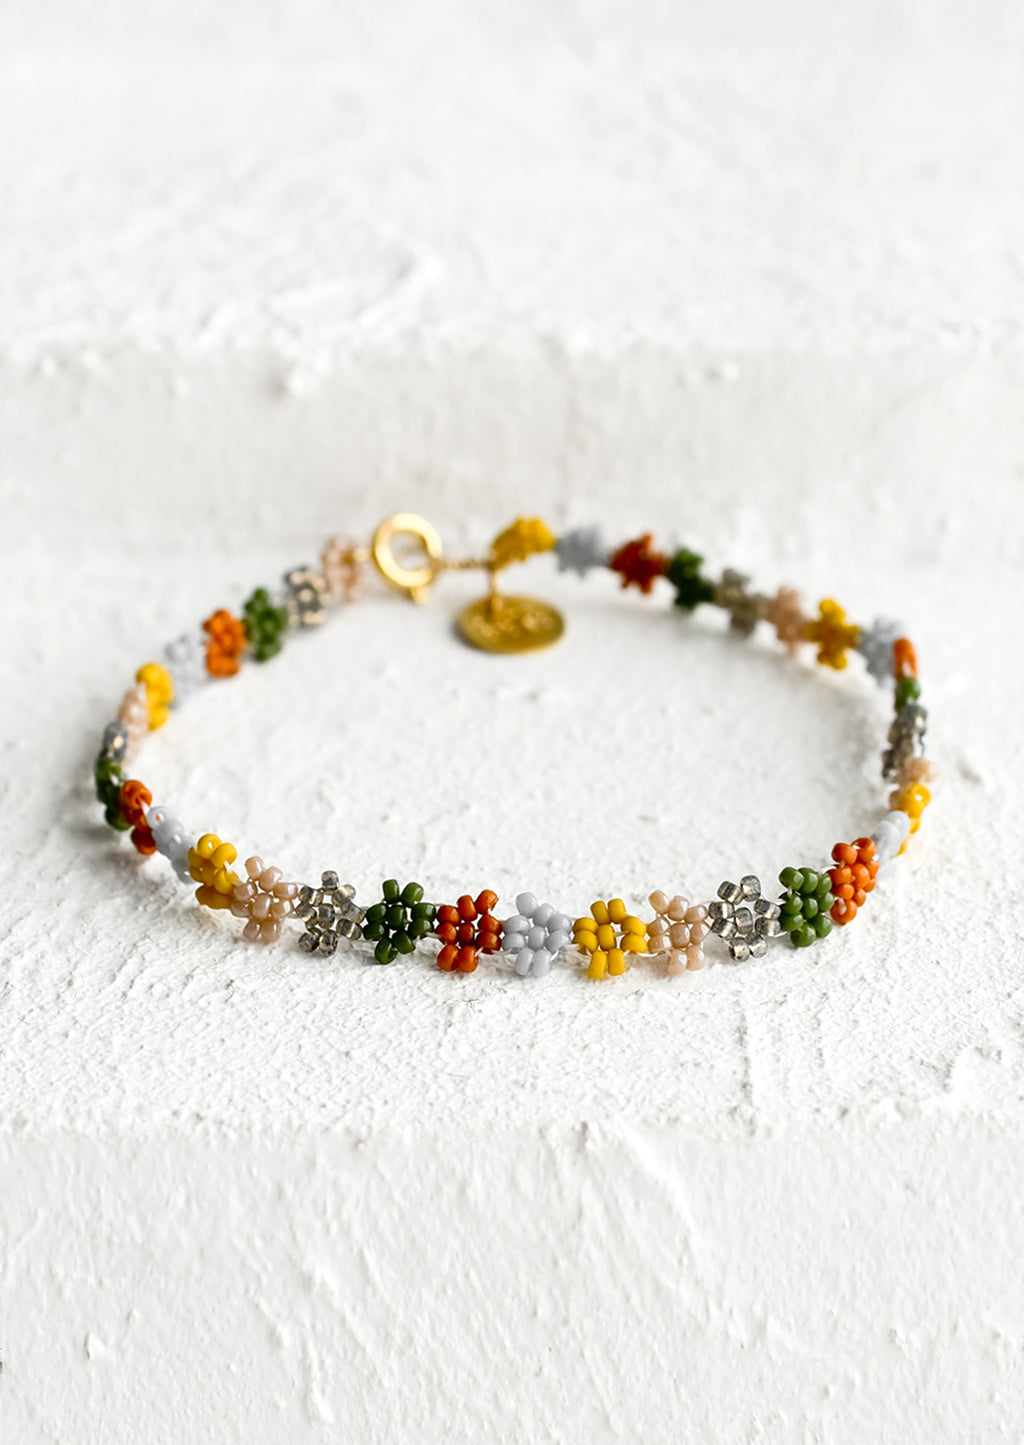 Spice Multi: A beaded bracelet in flower shape in rust, grey, mustard and olive.